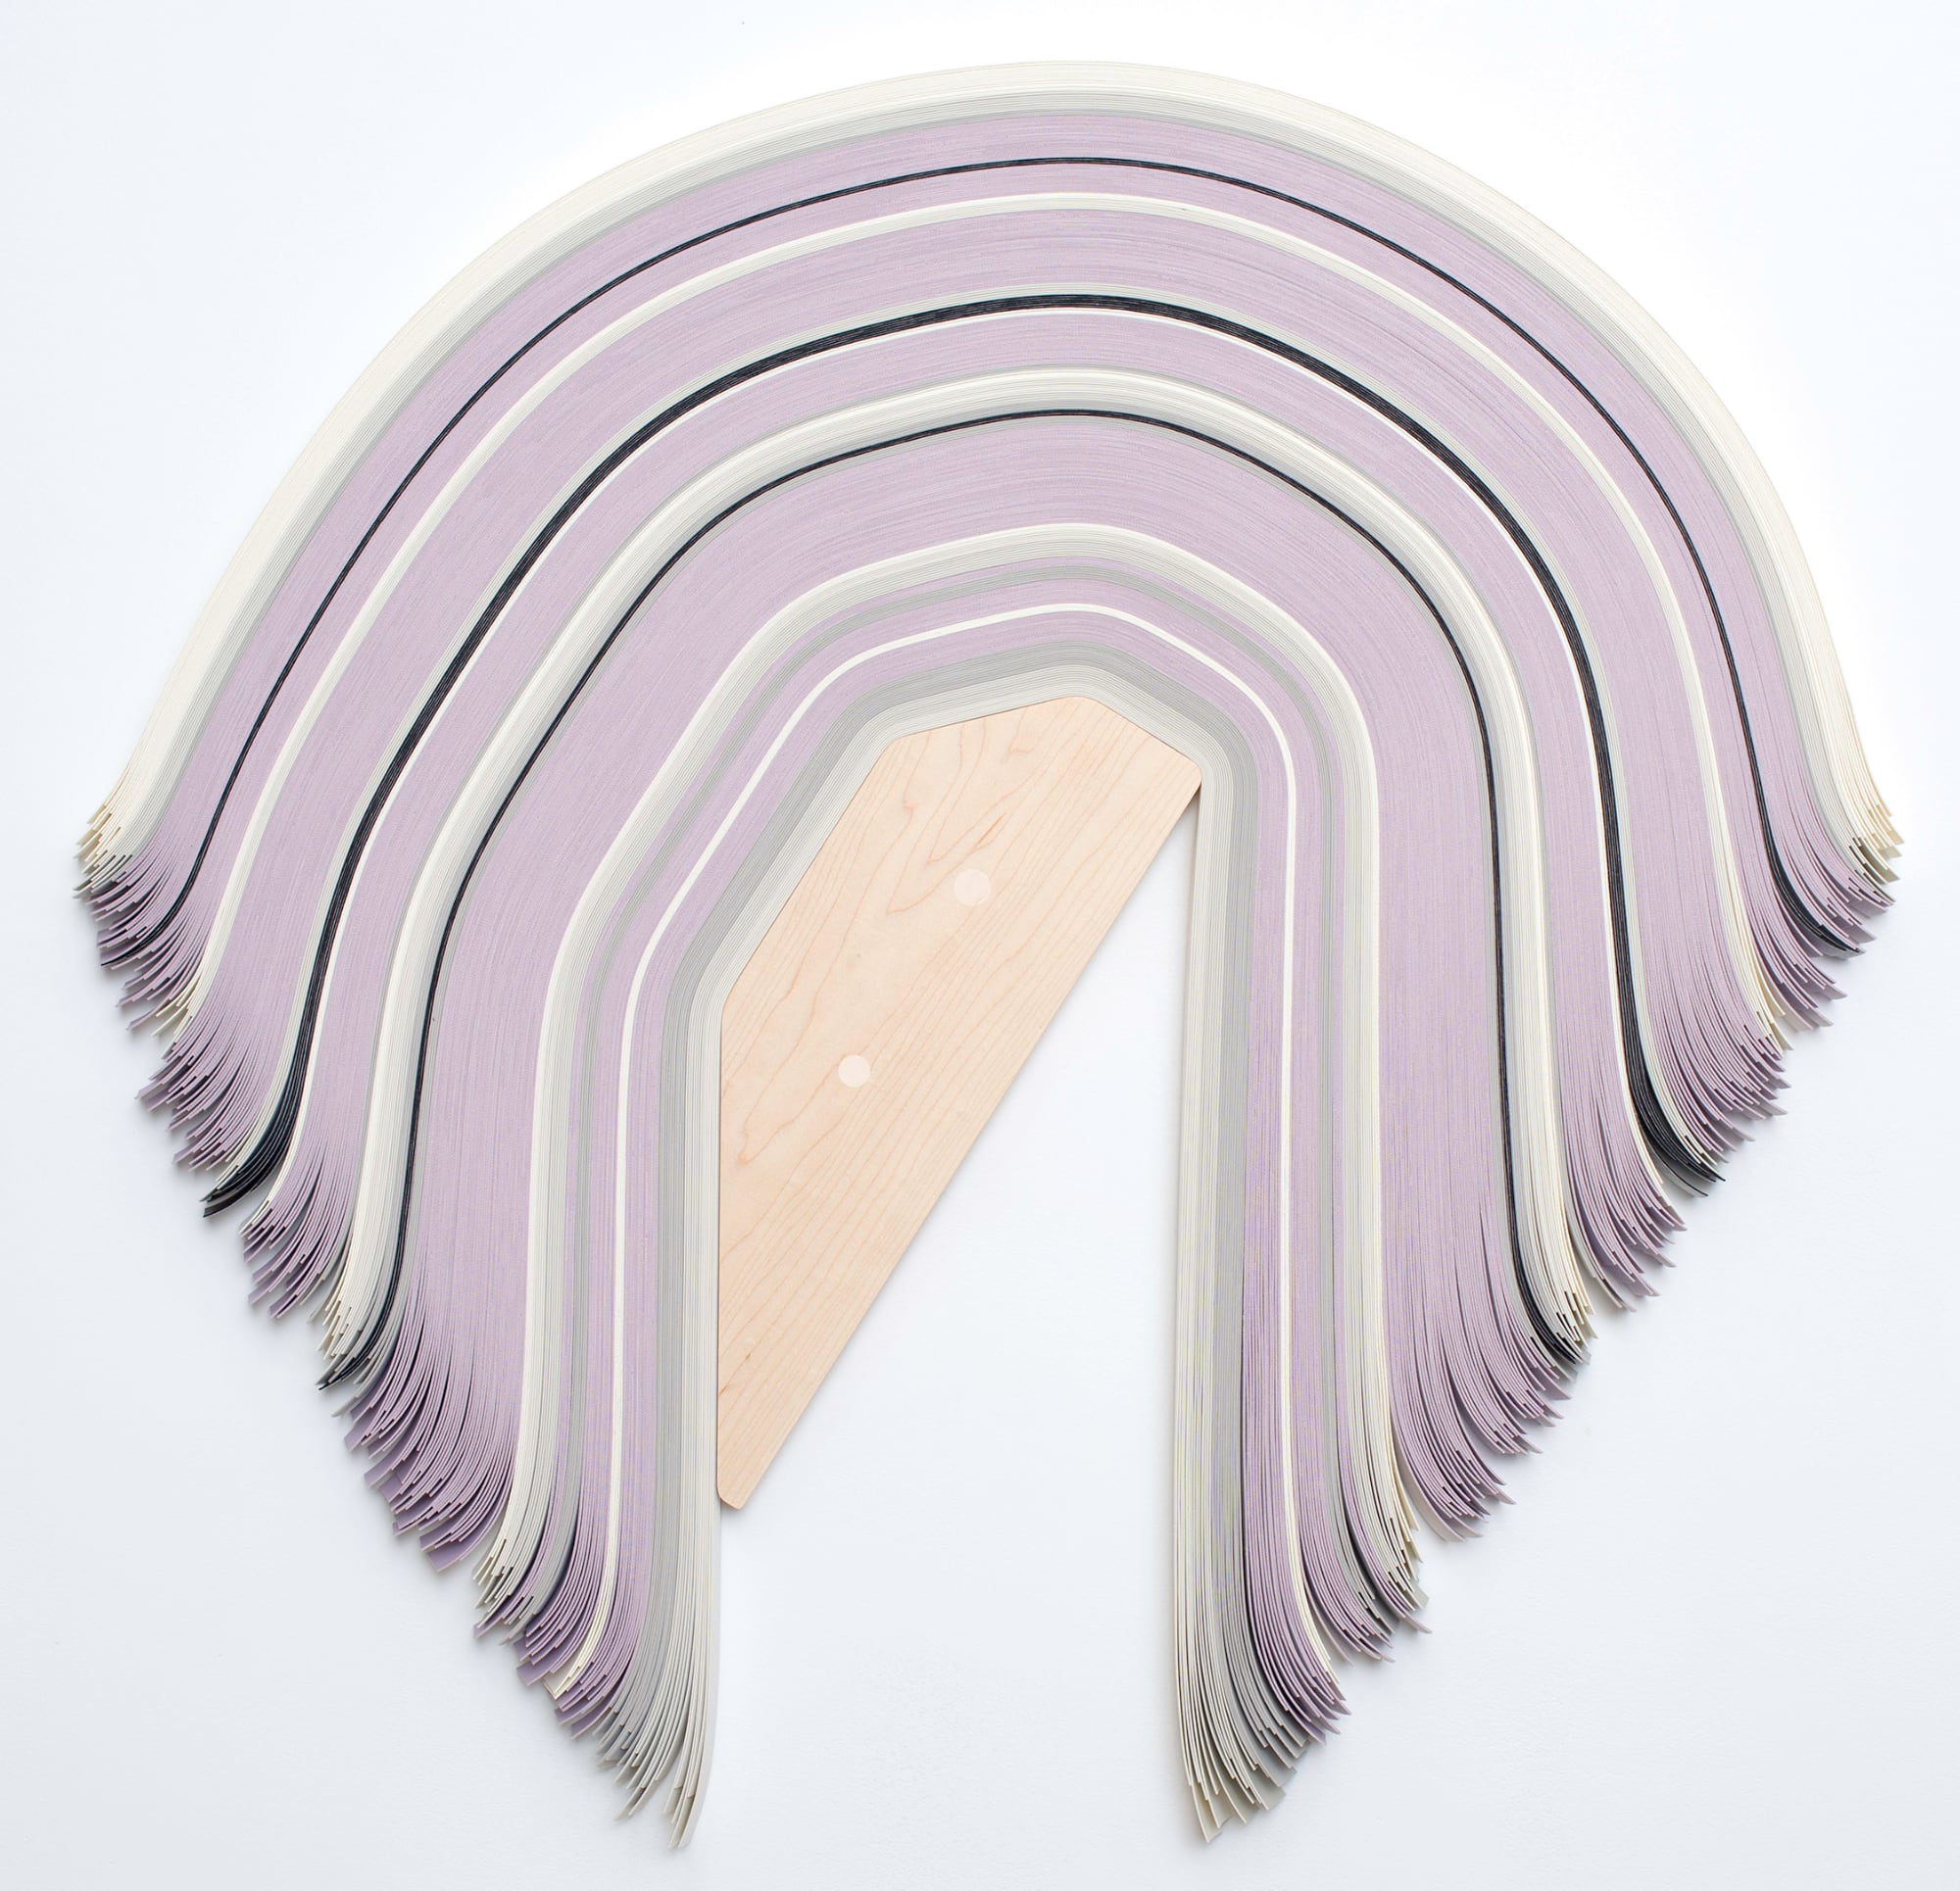 black, gray, purple, and beige vinyl strips slump in a striped pattern across a wooden triangle